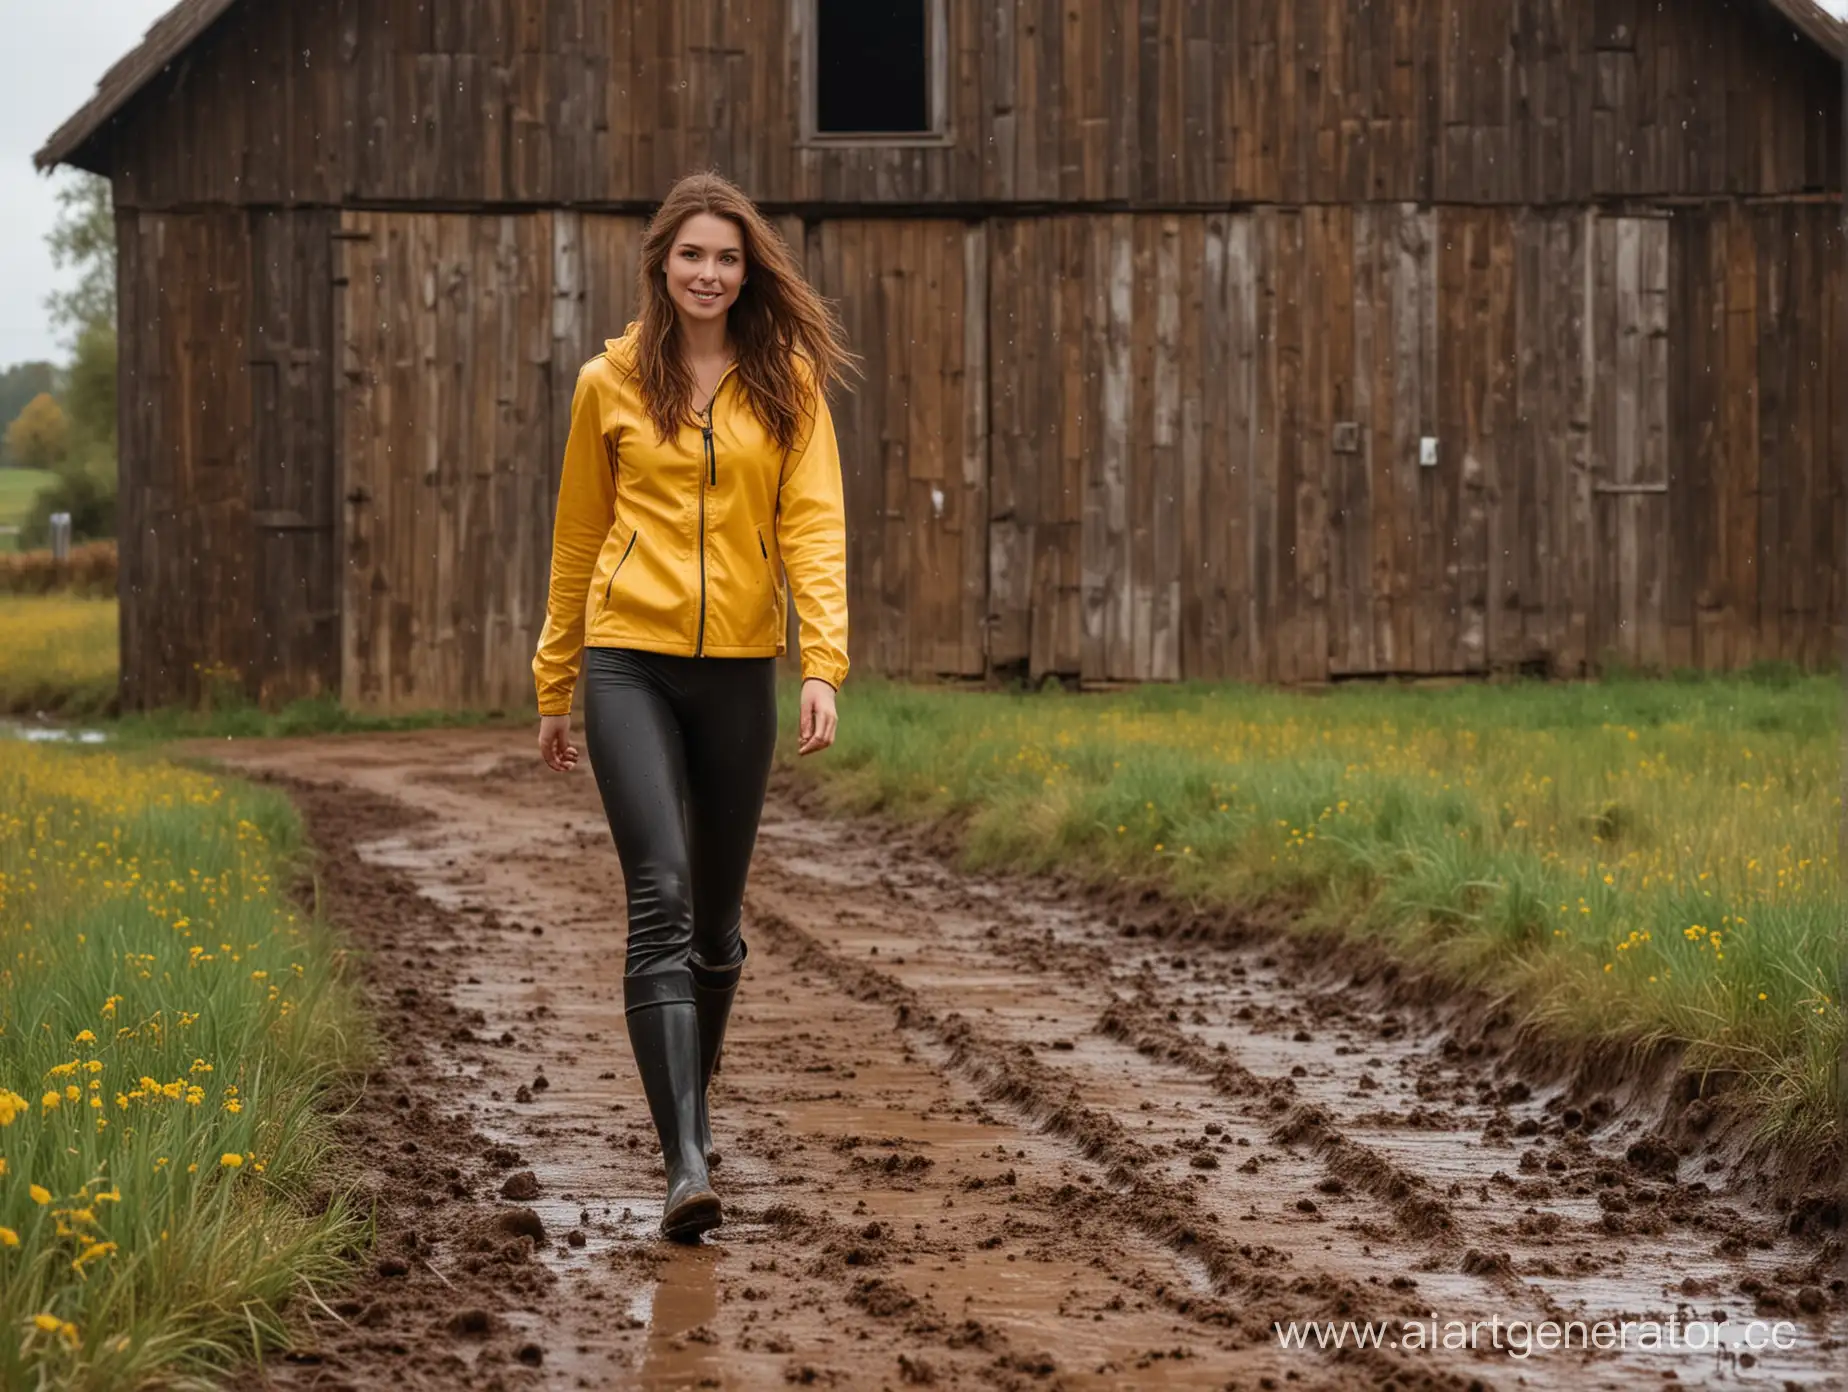 Joyful-Young-Woman-Enjoying-Rainy-Day-Mud-Play-by-Old-Barn